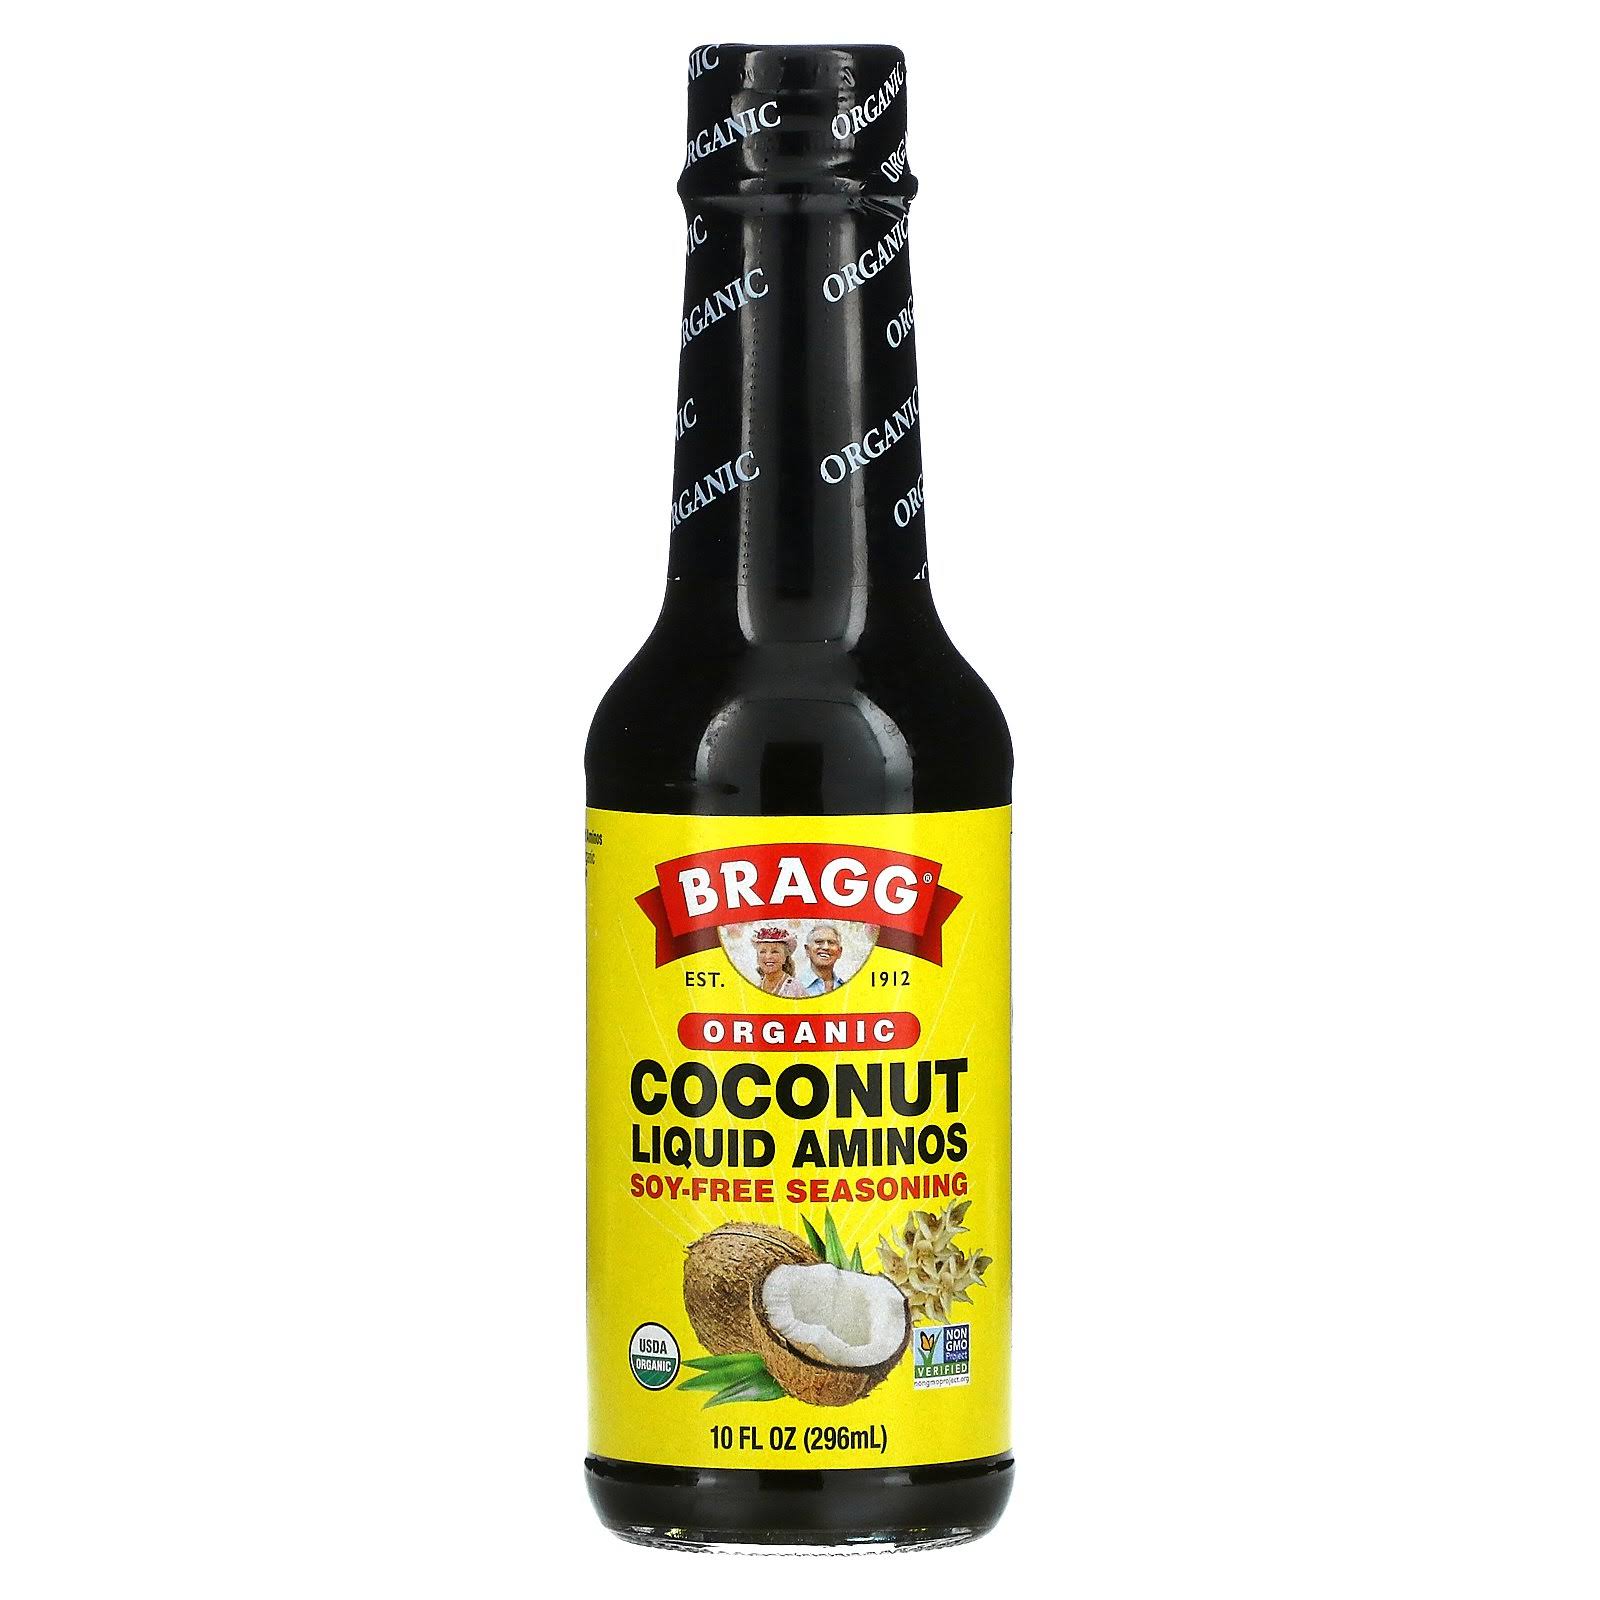 Bragg Organic Liquid Aminos, Coconut - 10 fl oz bottle